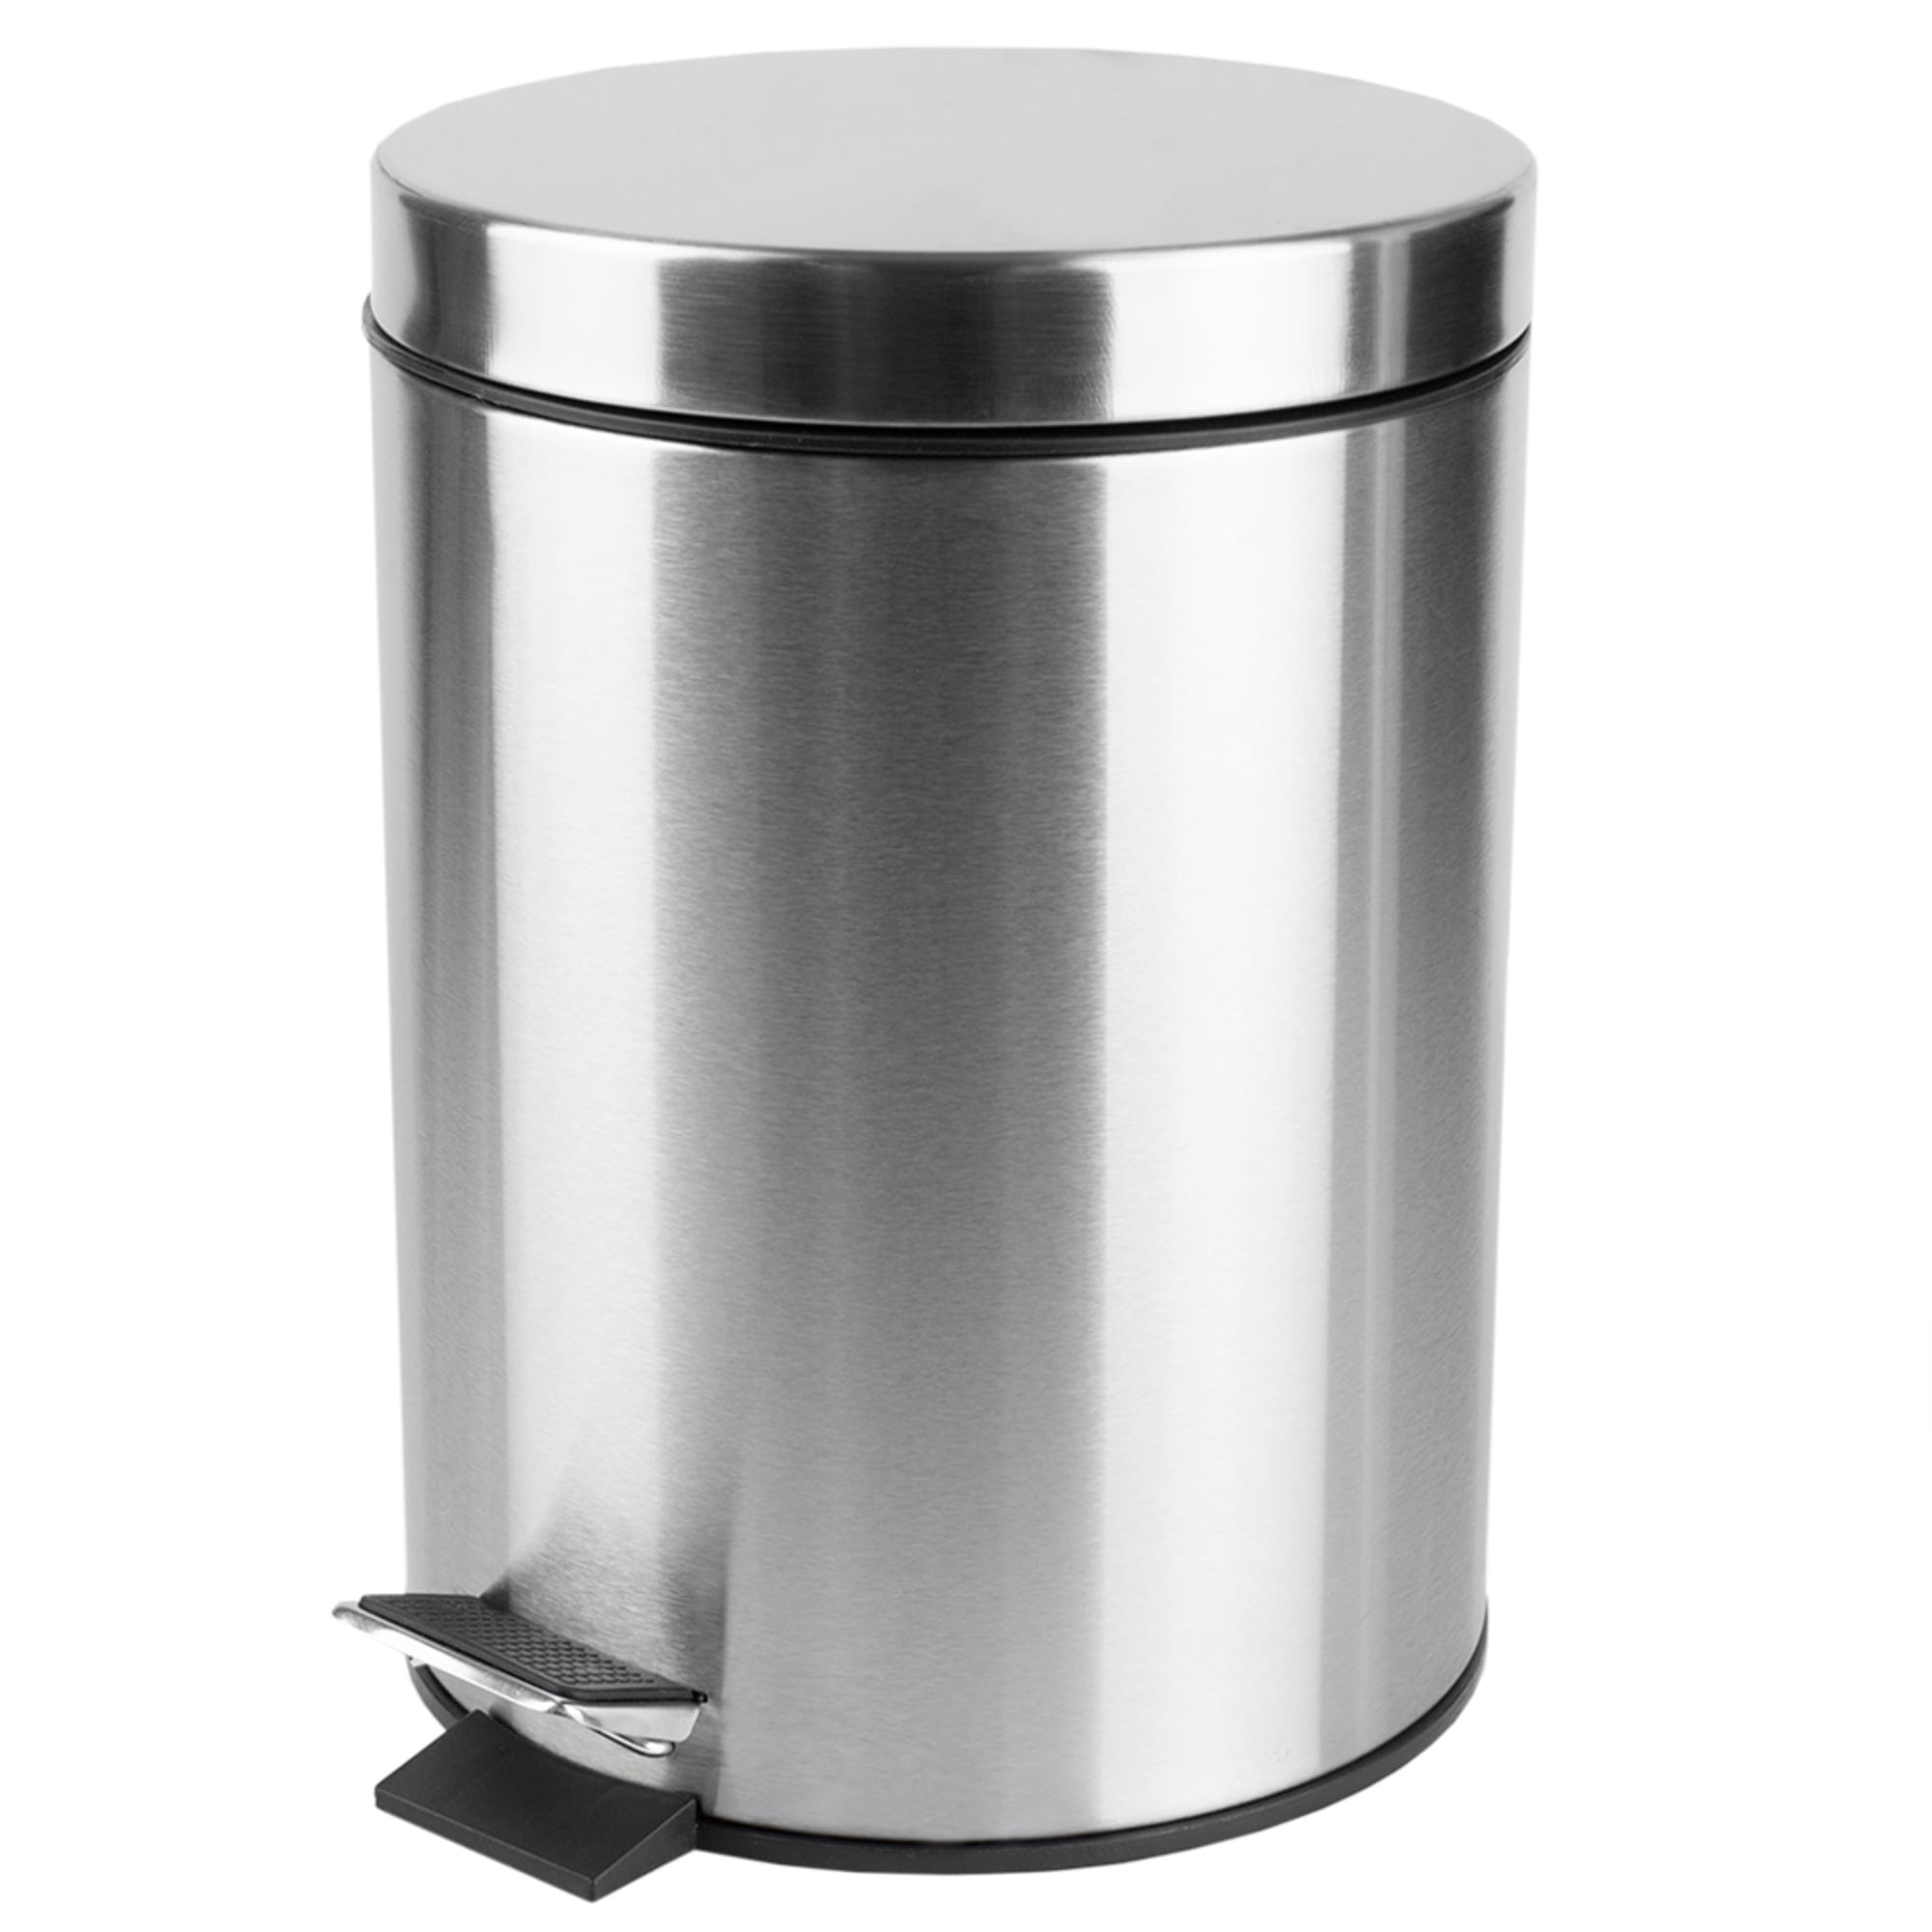 Home Basics 5 Liter Stainless Steel Matte Waste Bin $10.00 EACH, CASE PACK OF 4